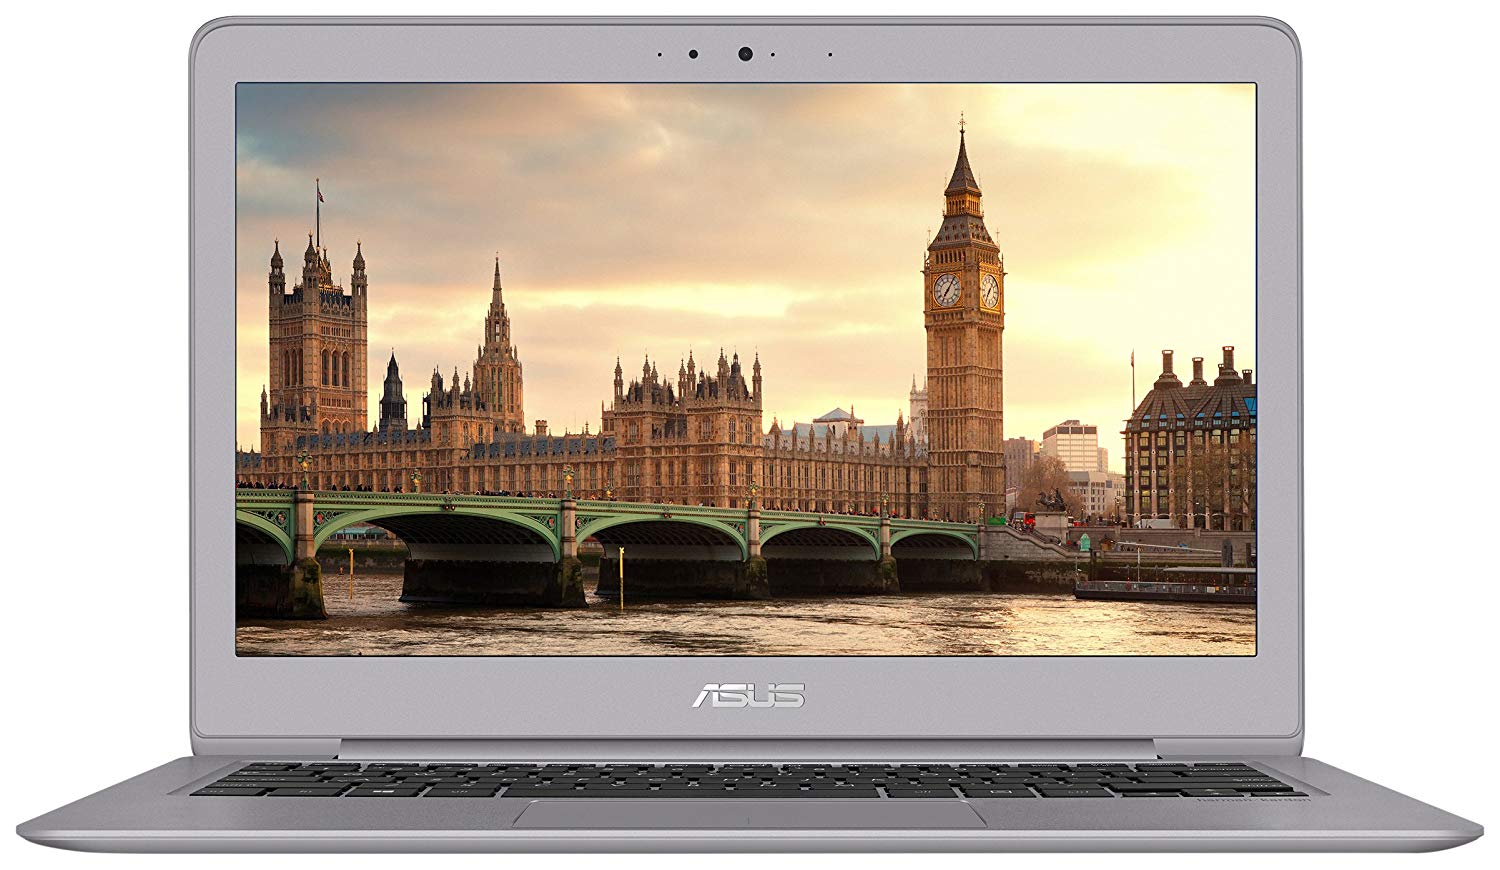 Asus Zenbook 13 laptop